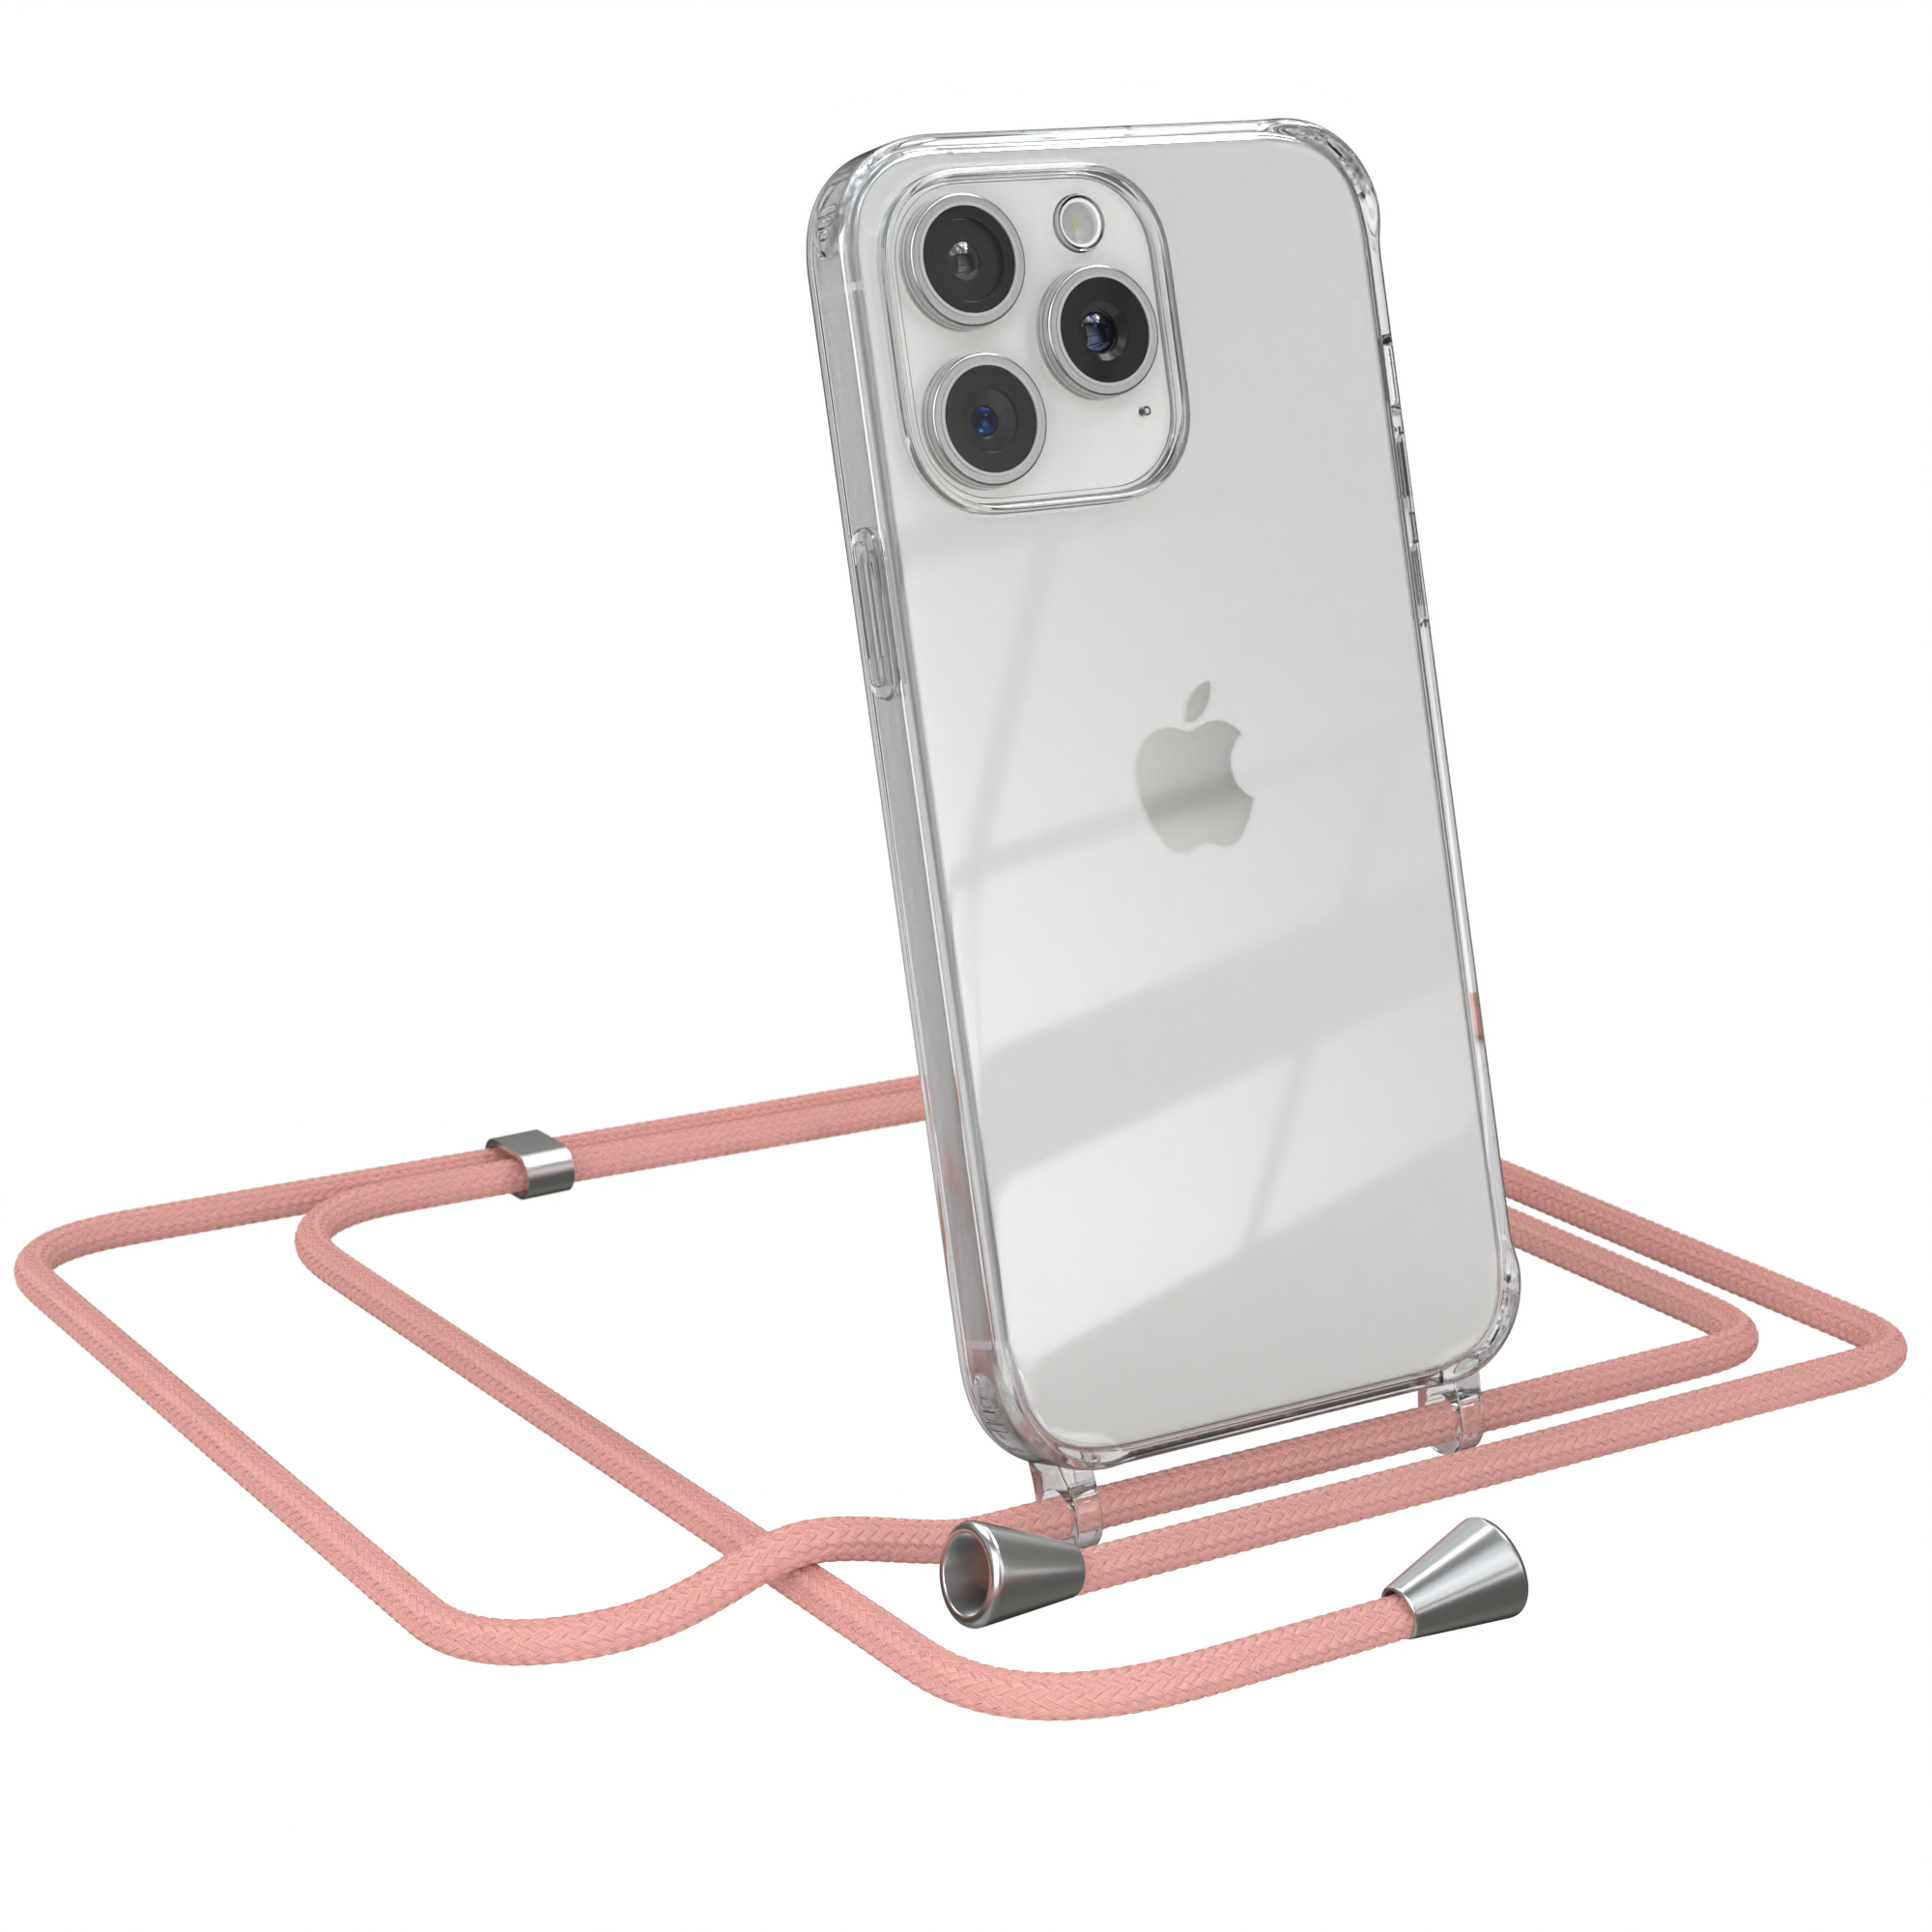 EAZY CASE Clear Max, Umhängetasche, Uni iPhone Umhängeband, mit Pro Cover Altrosa 15 Apple